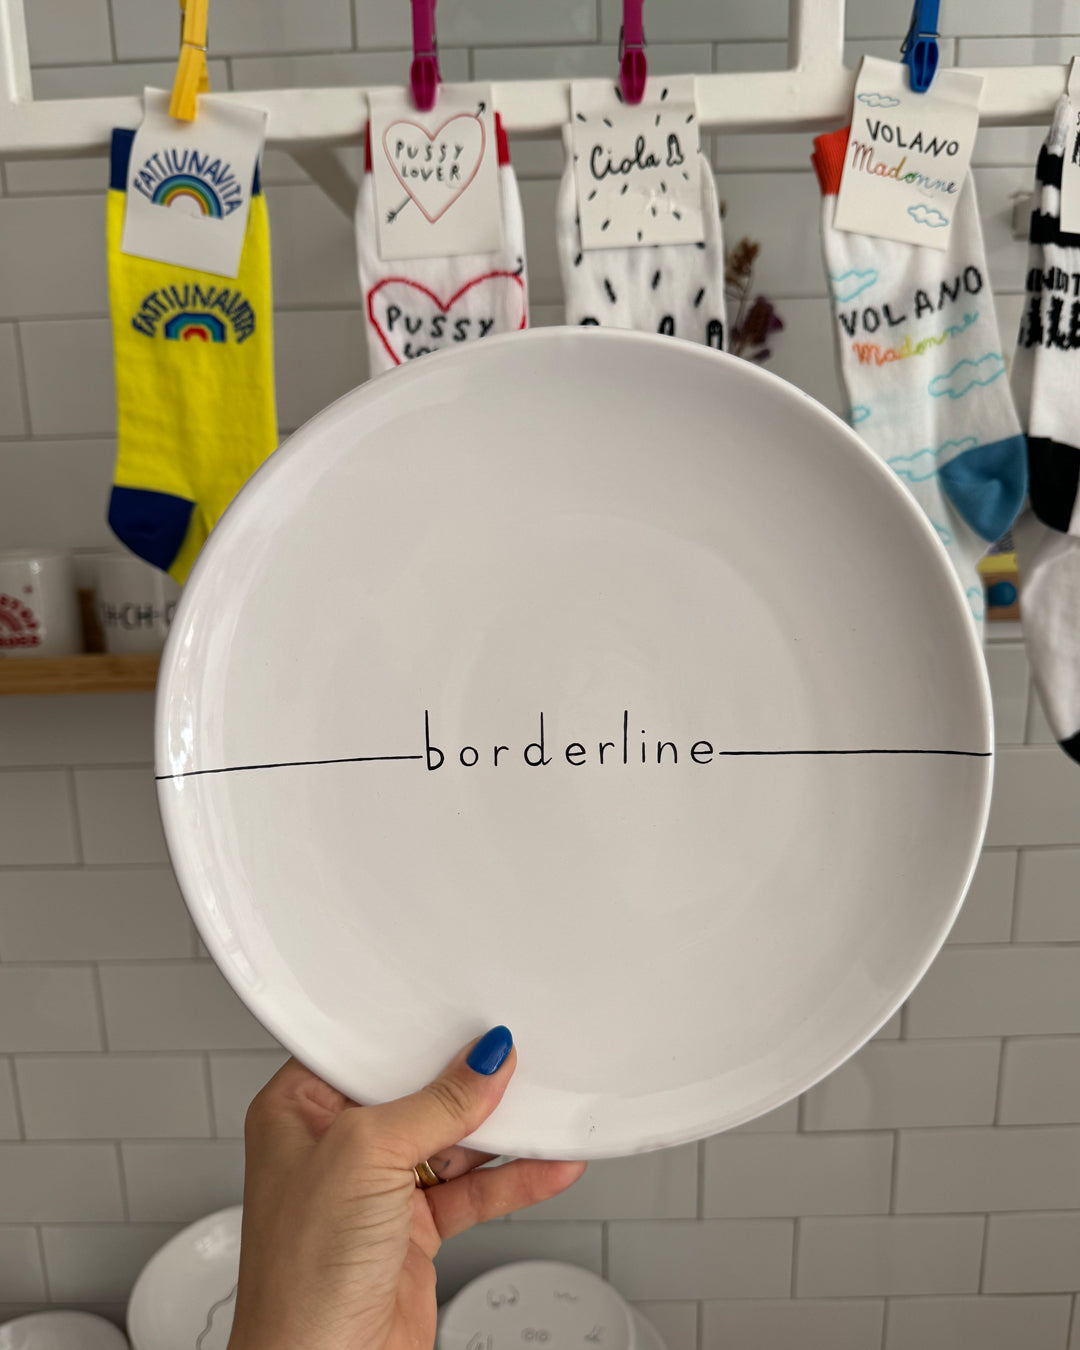 "Borderline" plate